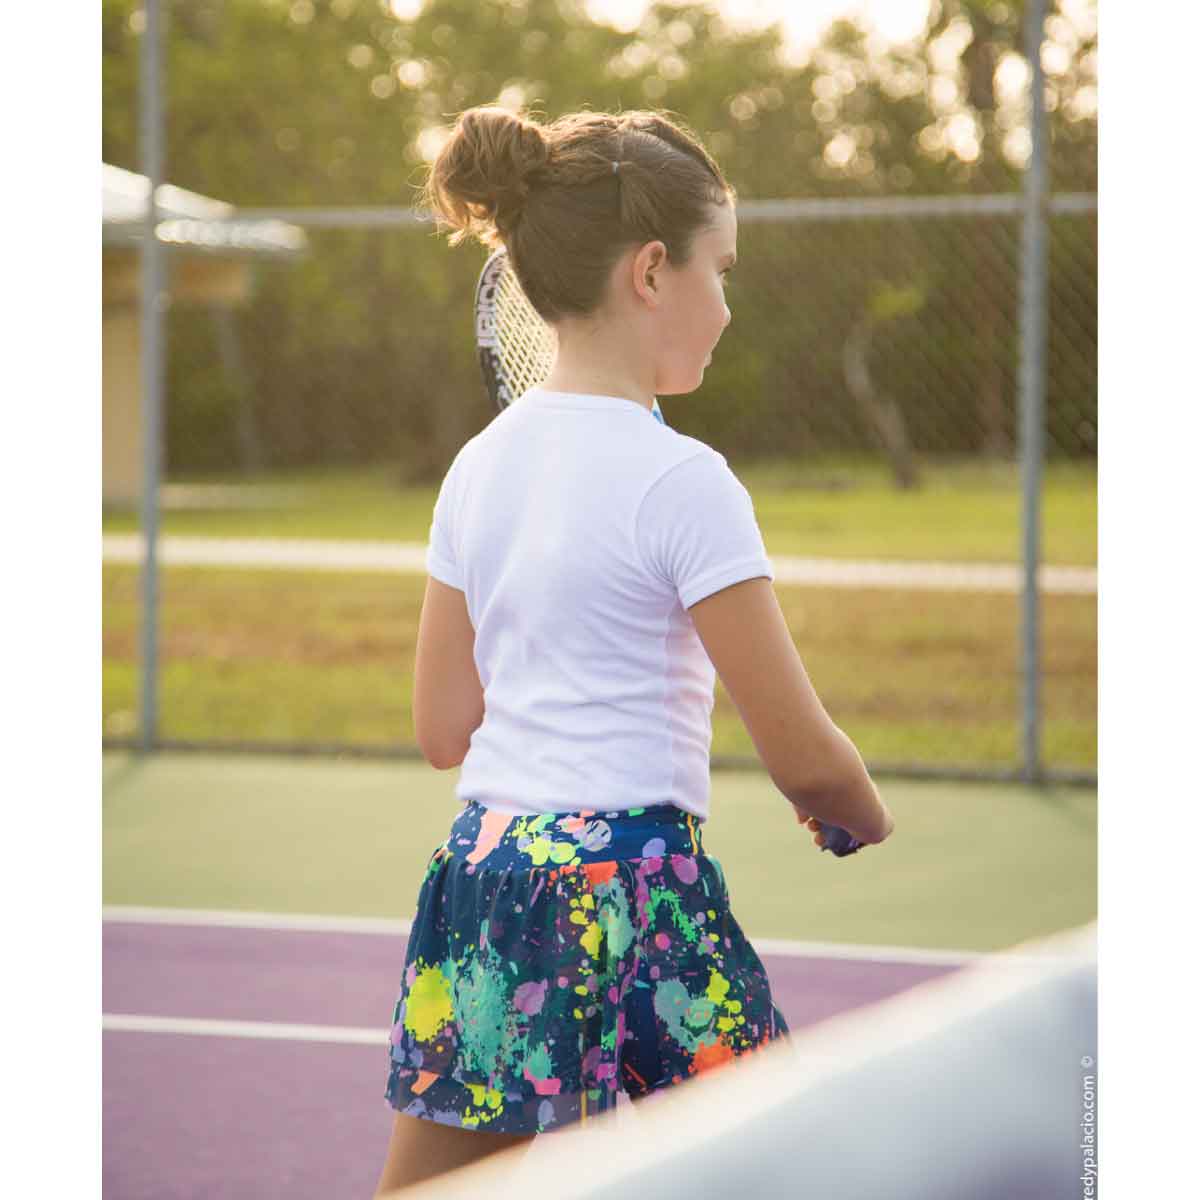 Golf Skirt v Tennis Skirt- What's the Difference? – SwingDish